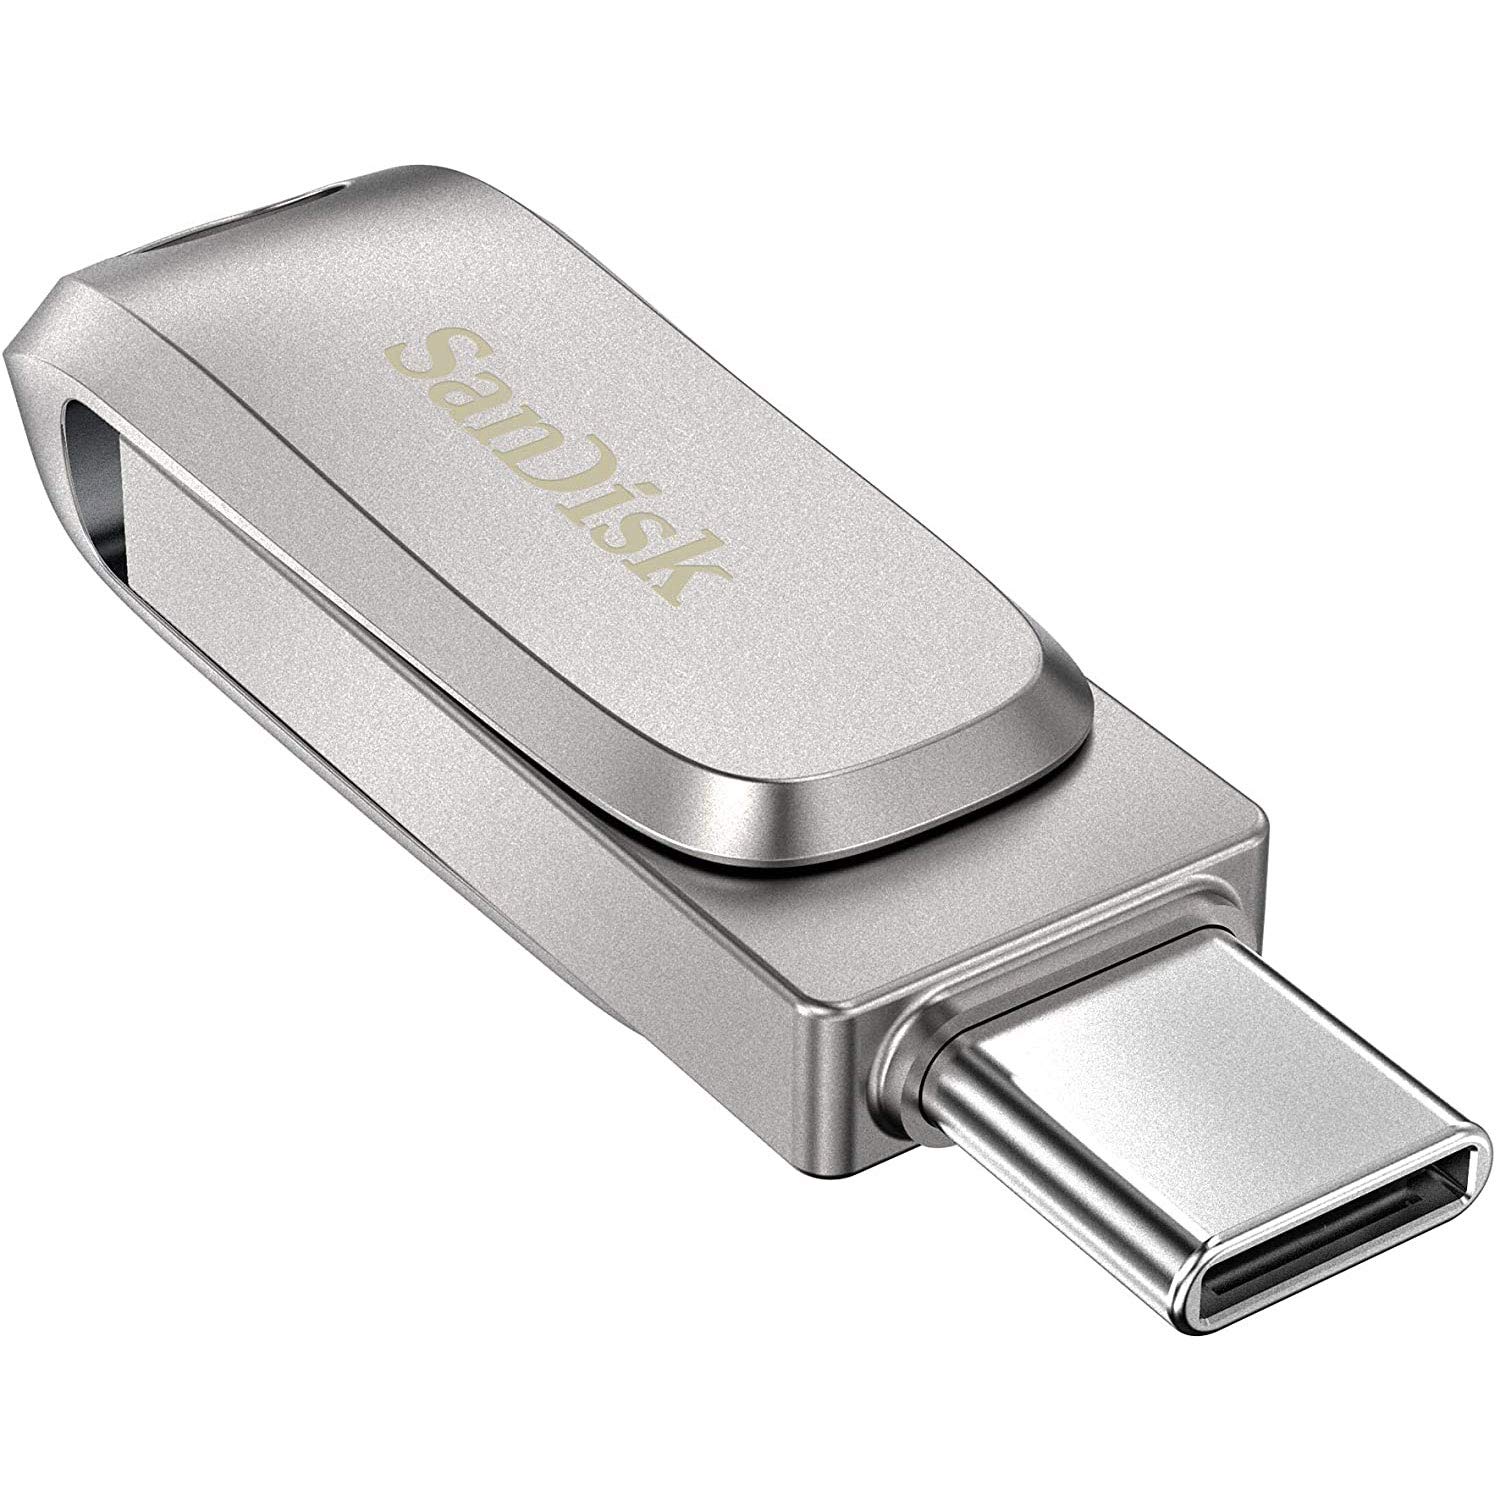 USBメモリー128GB SanDisk サンディスク USB3.1 Gen1-A/Type-C 両コネクタ搭載Ultra Dual Drive Luxe 回転式 [並行輸入品]